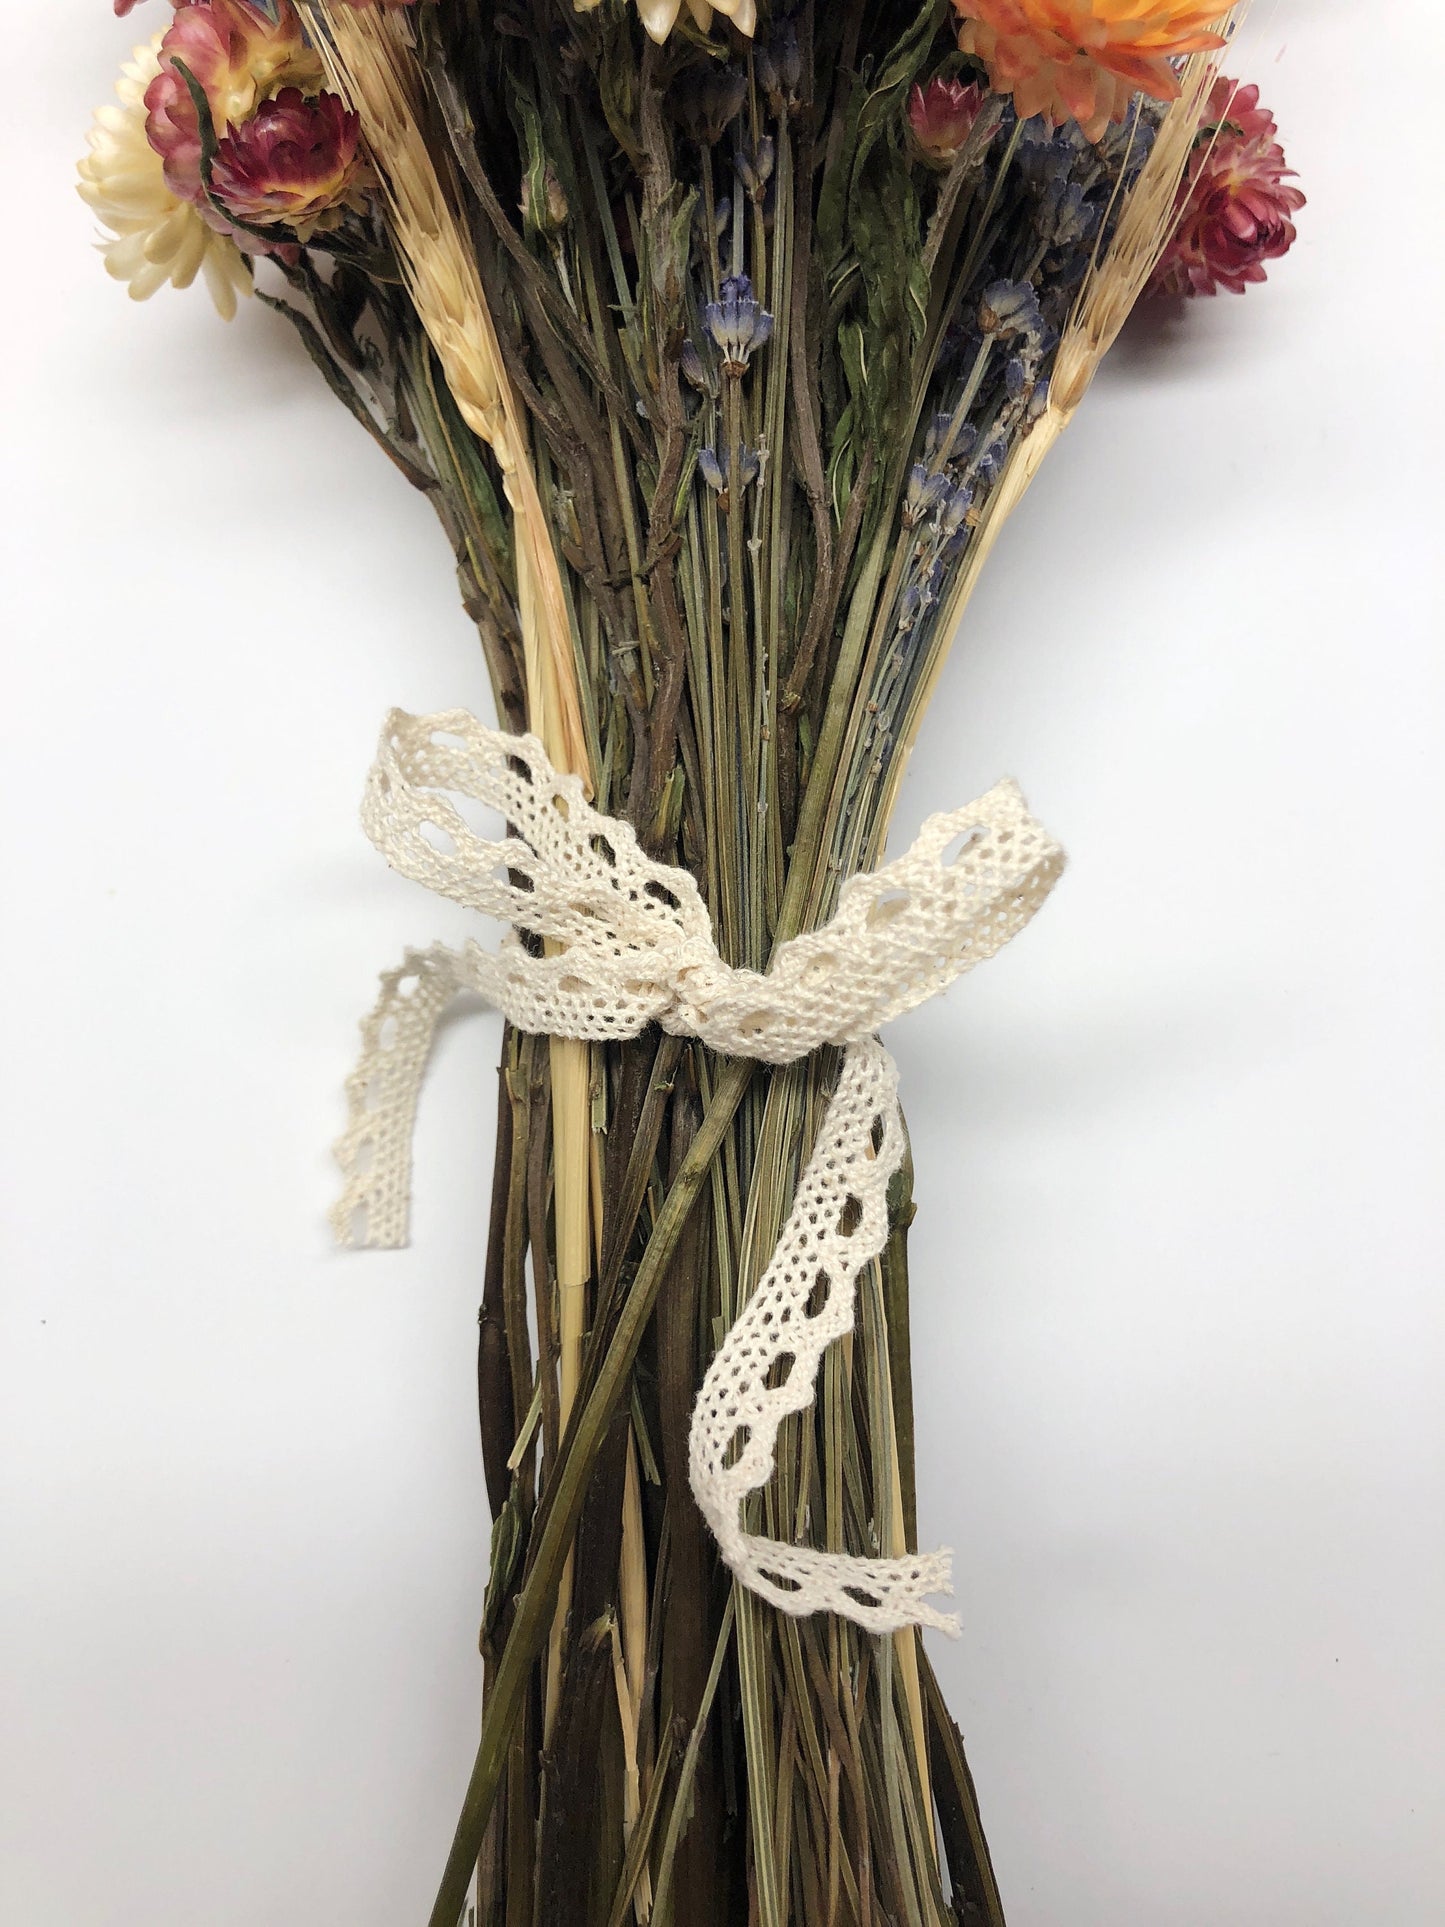 Floral Bouquet, Preserved Flower, Wedding, Anniversary gift, Fire Red Strawflower, White Strawflower, Lavender, Blonde Wheat, Gift